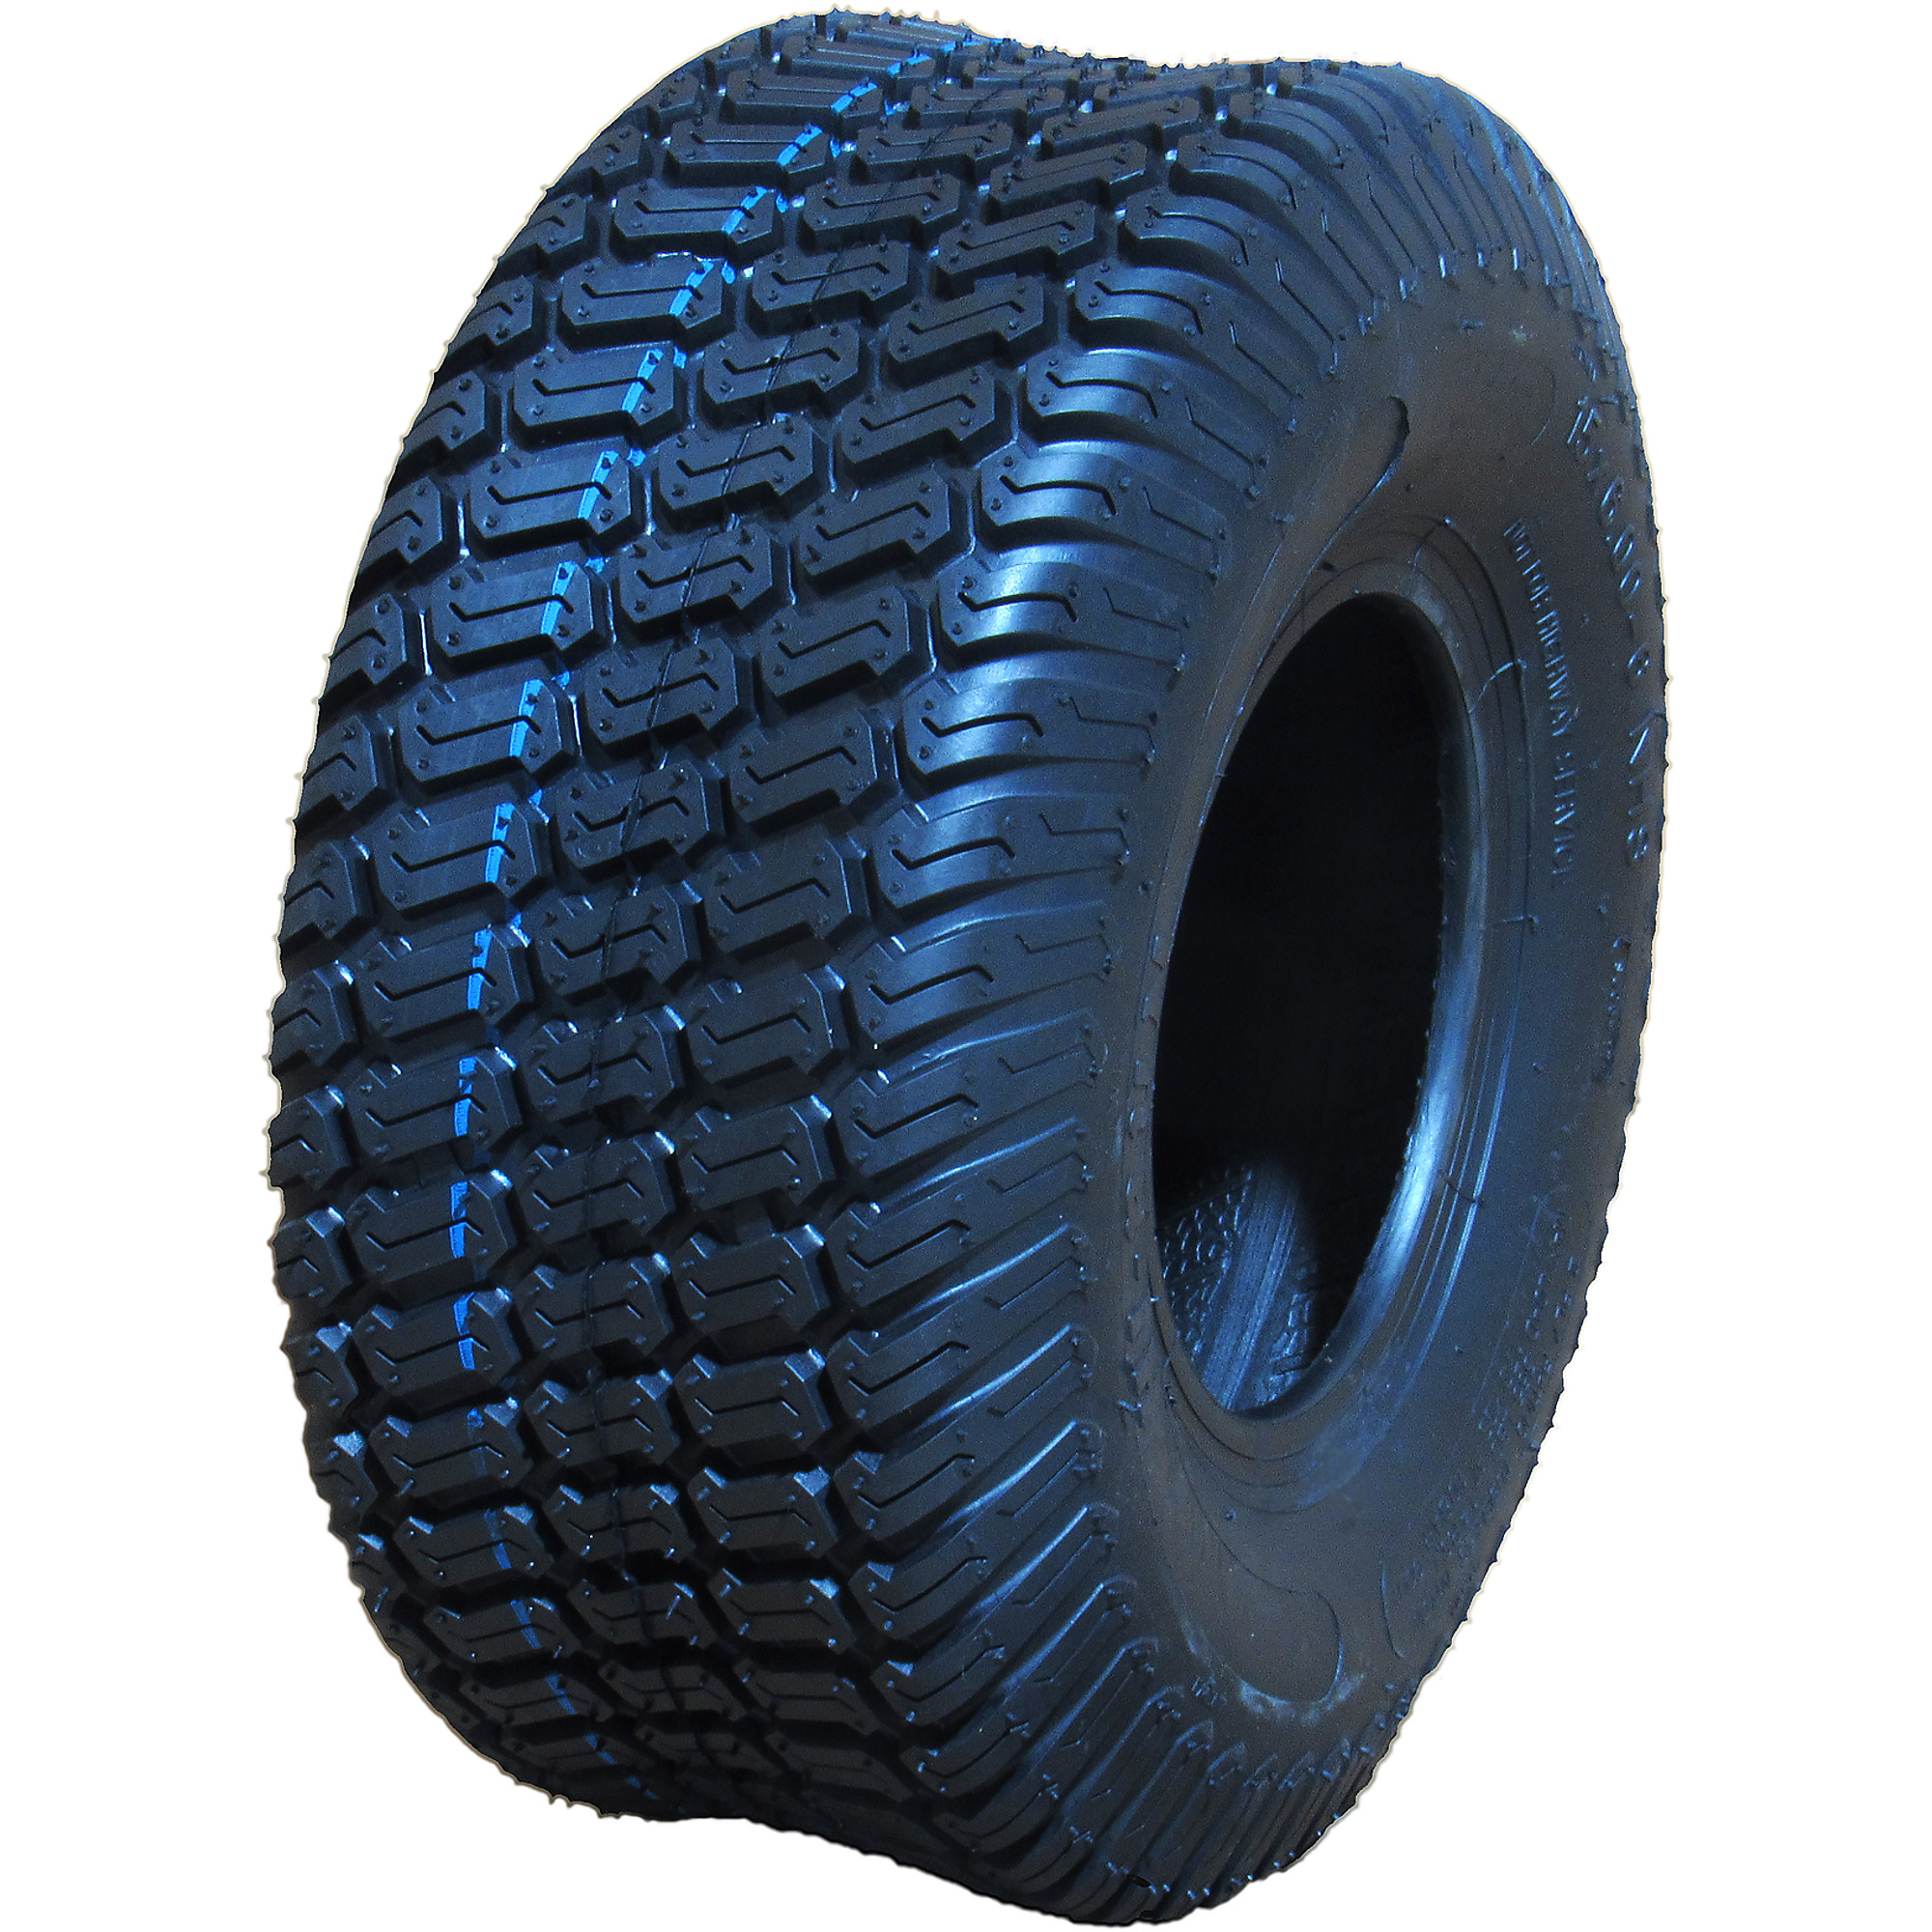 HI-RUN, Lawn Garden Tire, SU05 Turf, Tire Size 22X11.00-10 Load Range Rating B, Model WD1287